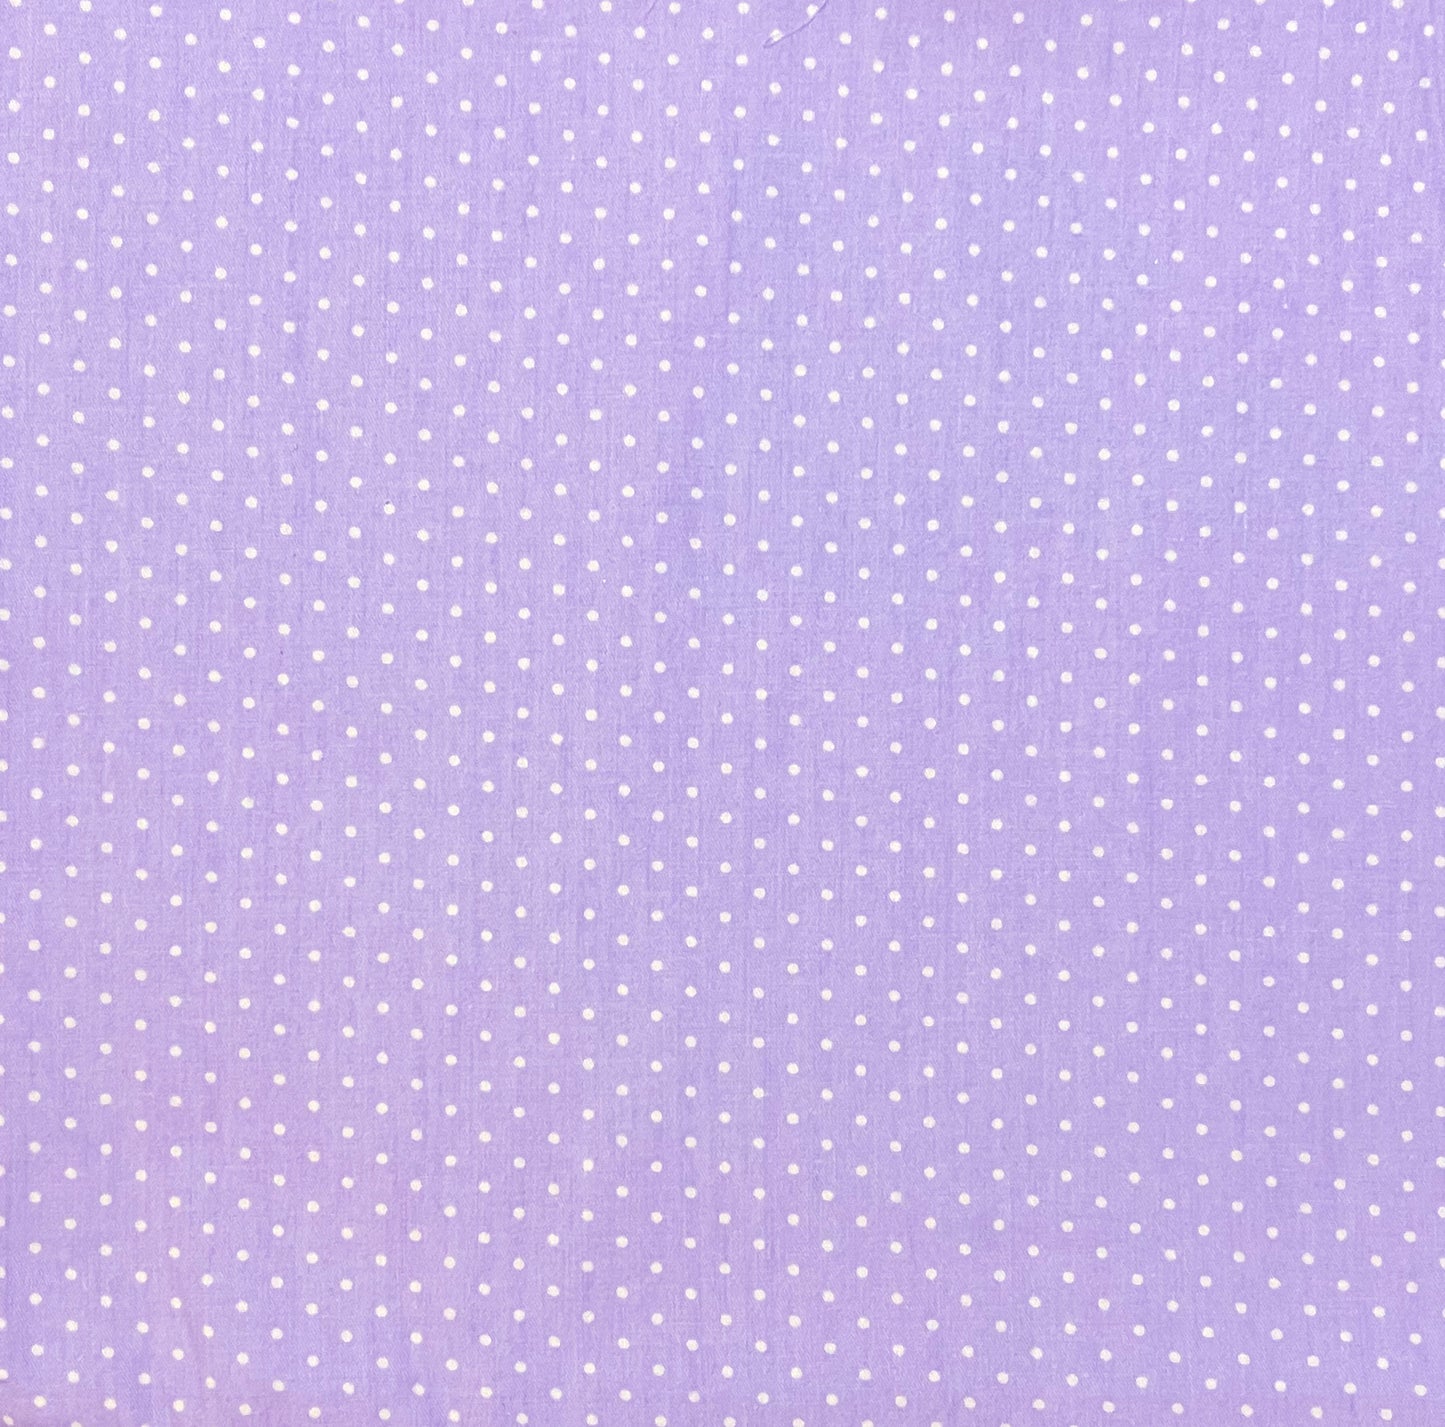 White dots on purple